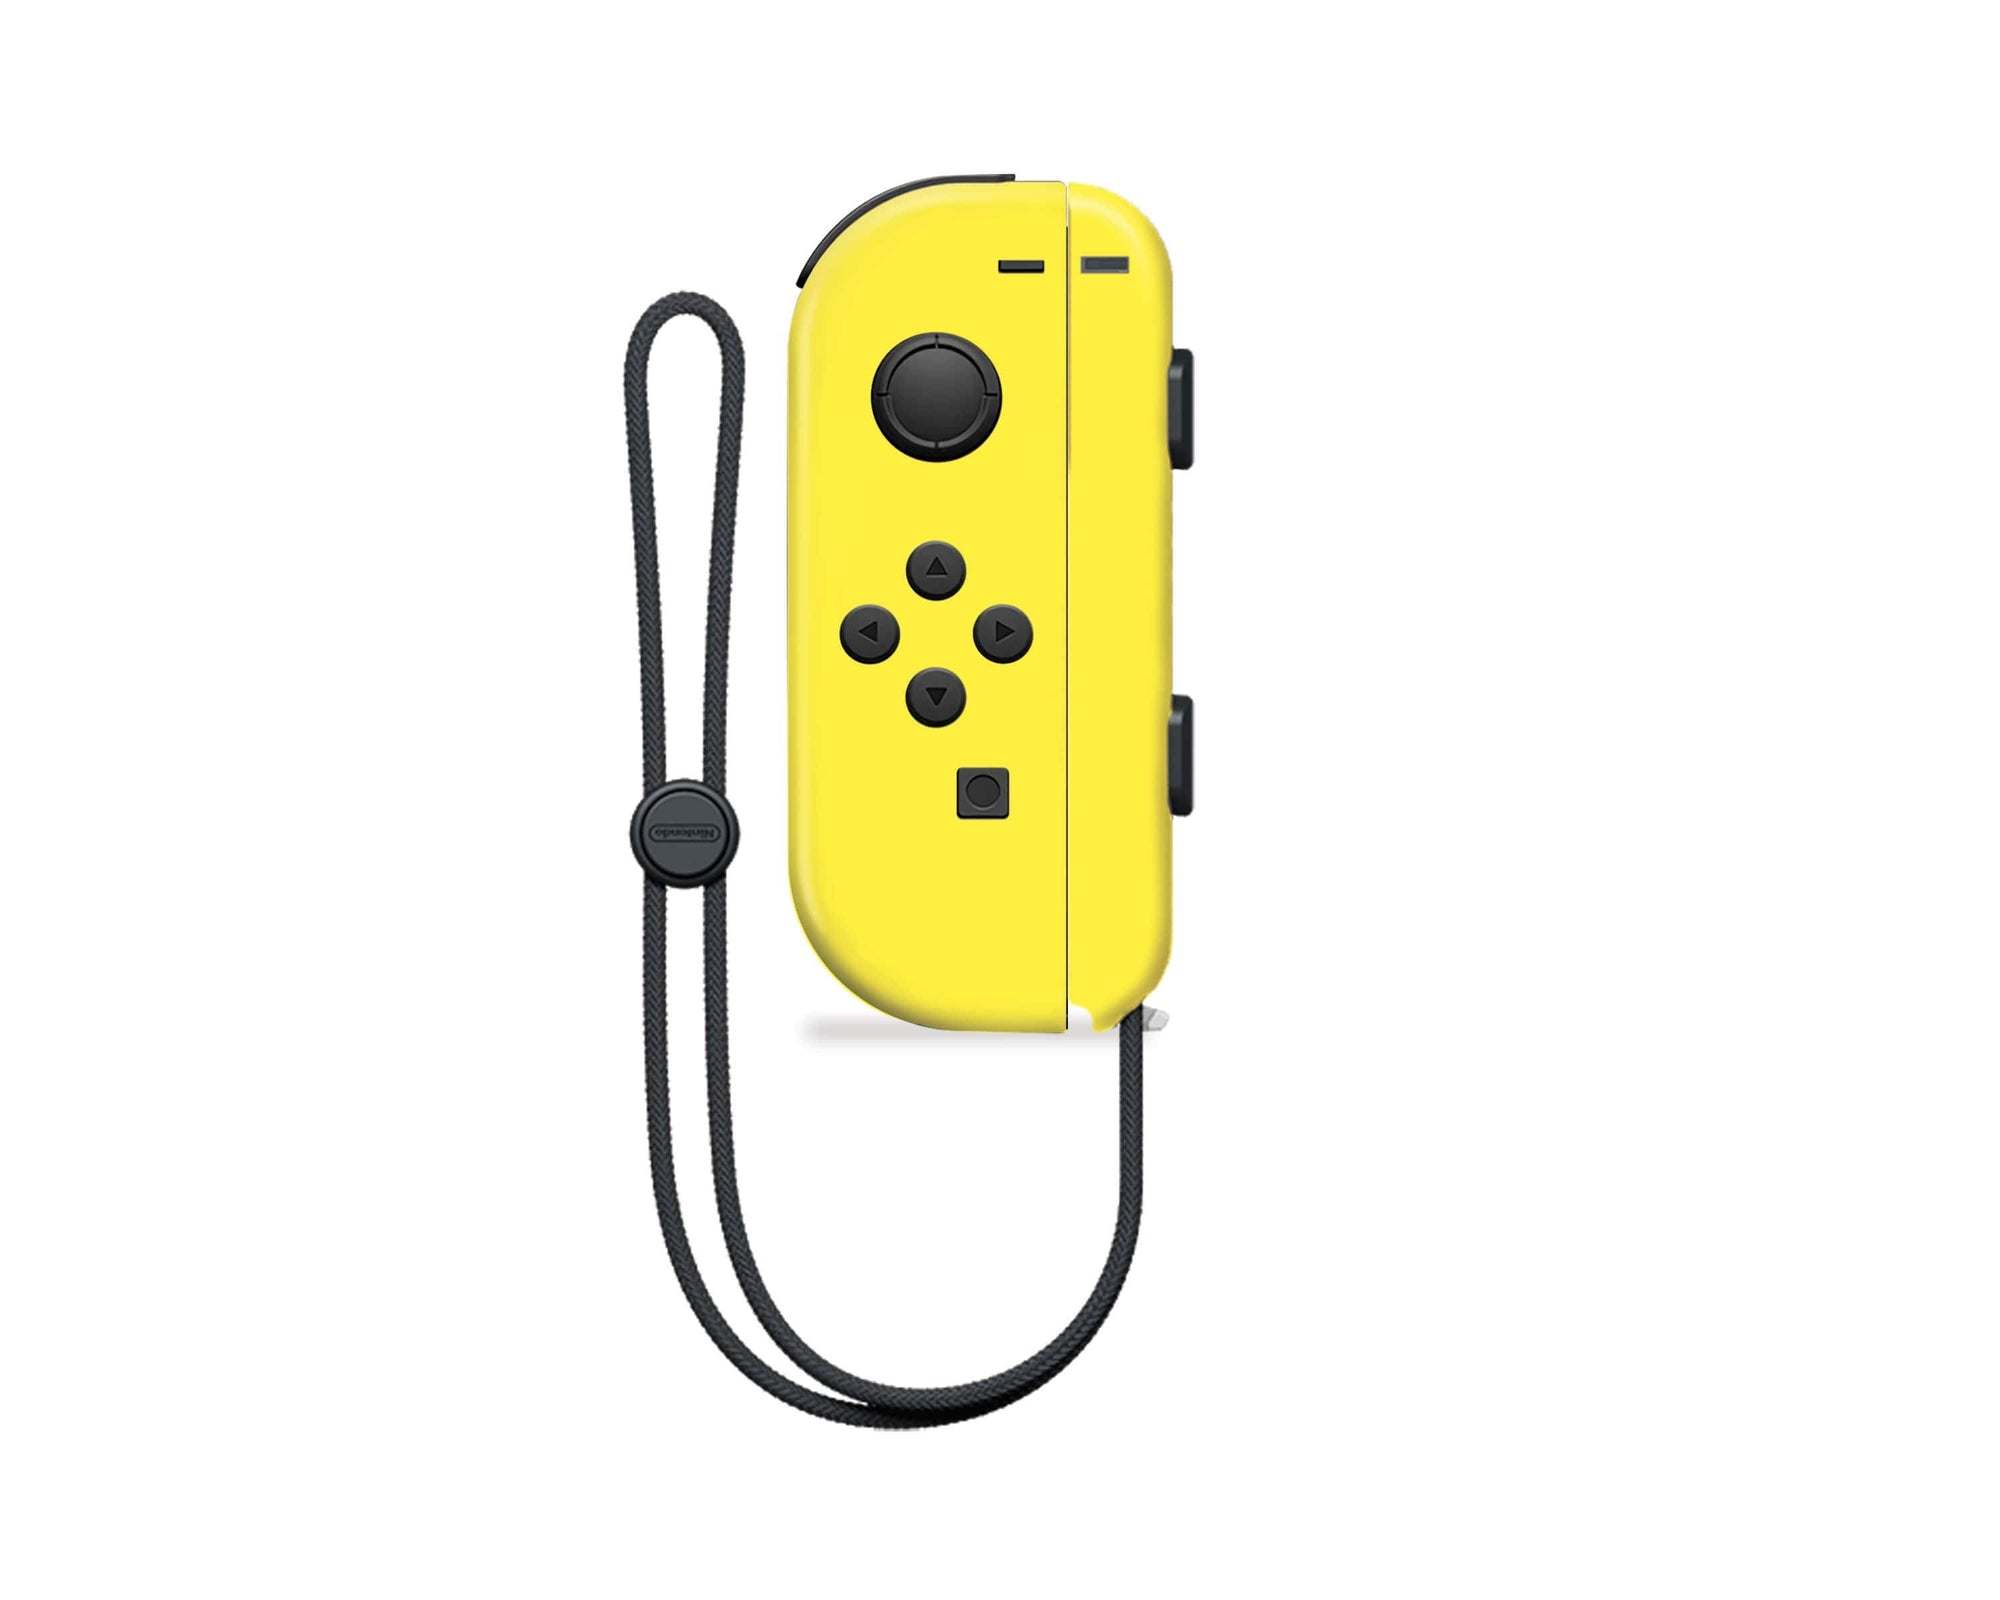 & Match - Classic Color Nintendo Switch Joy-Con - StickyBunny